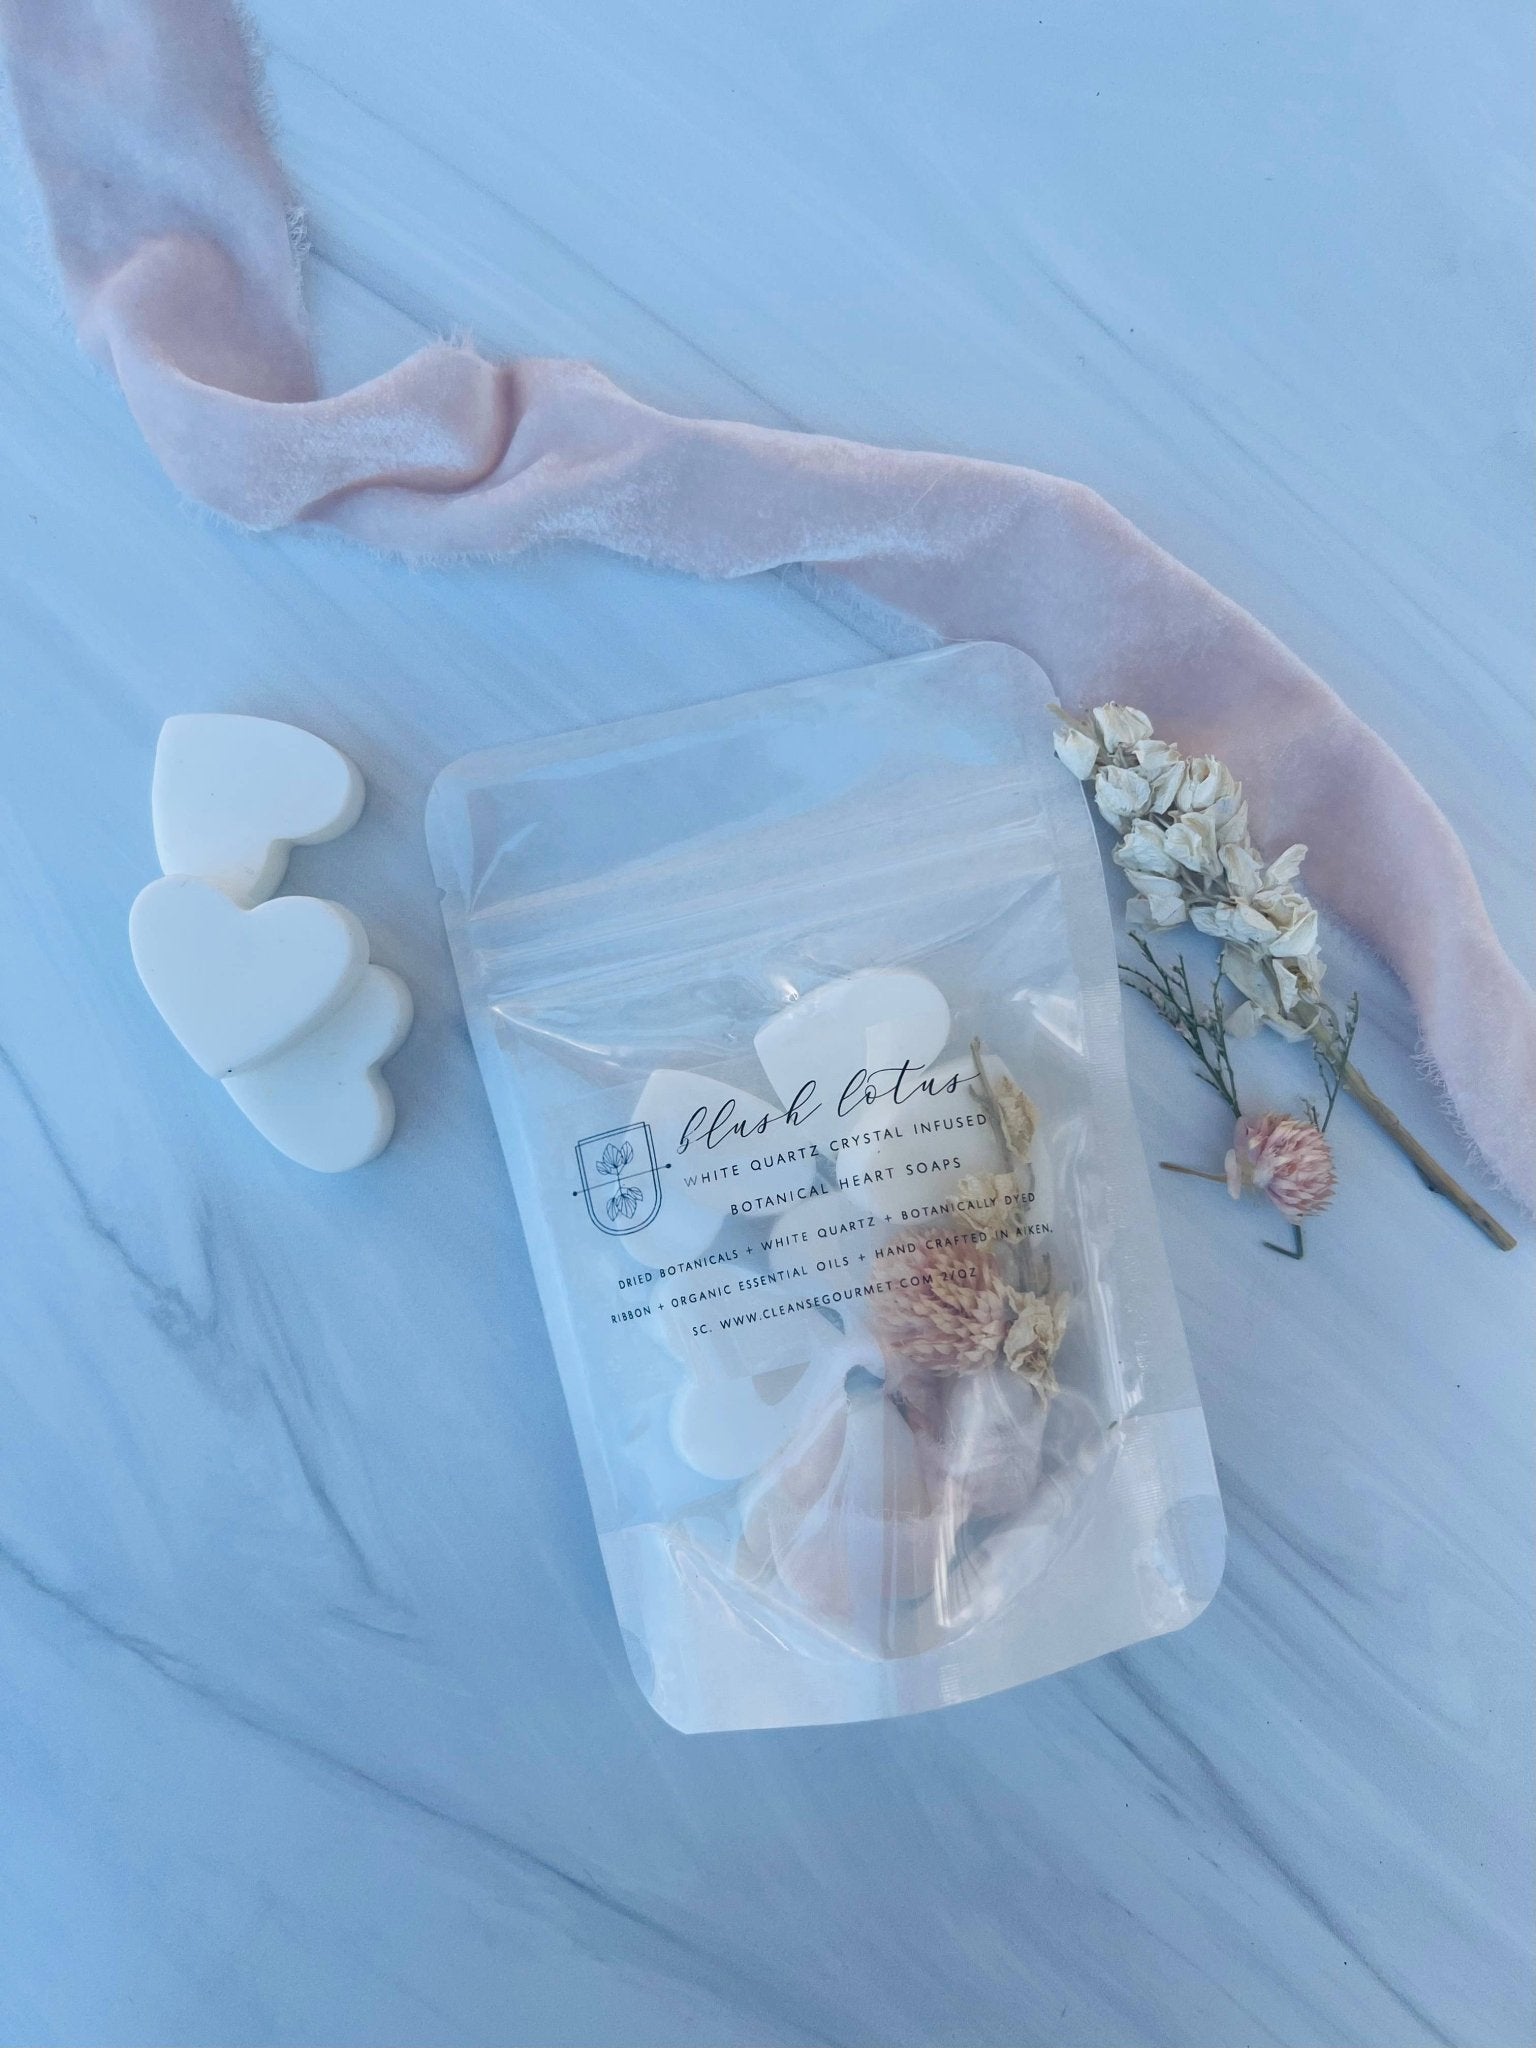 Blush Lotus crystal + botanicals infused heart hand soaps - Eventide Botanical Wellness